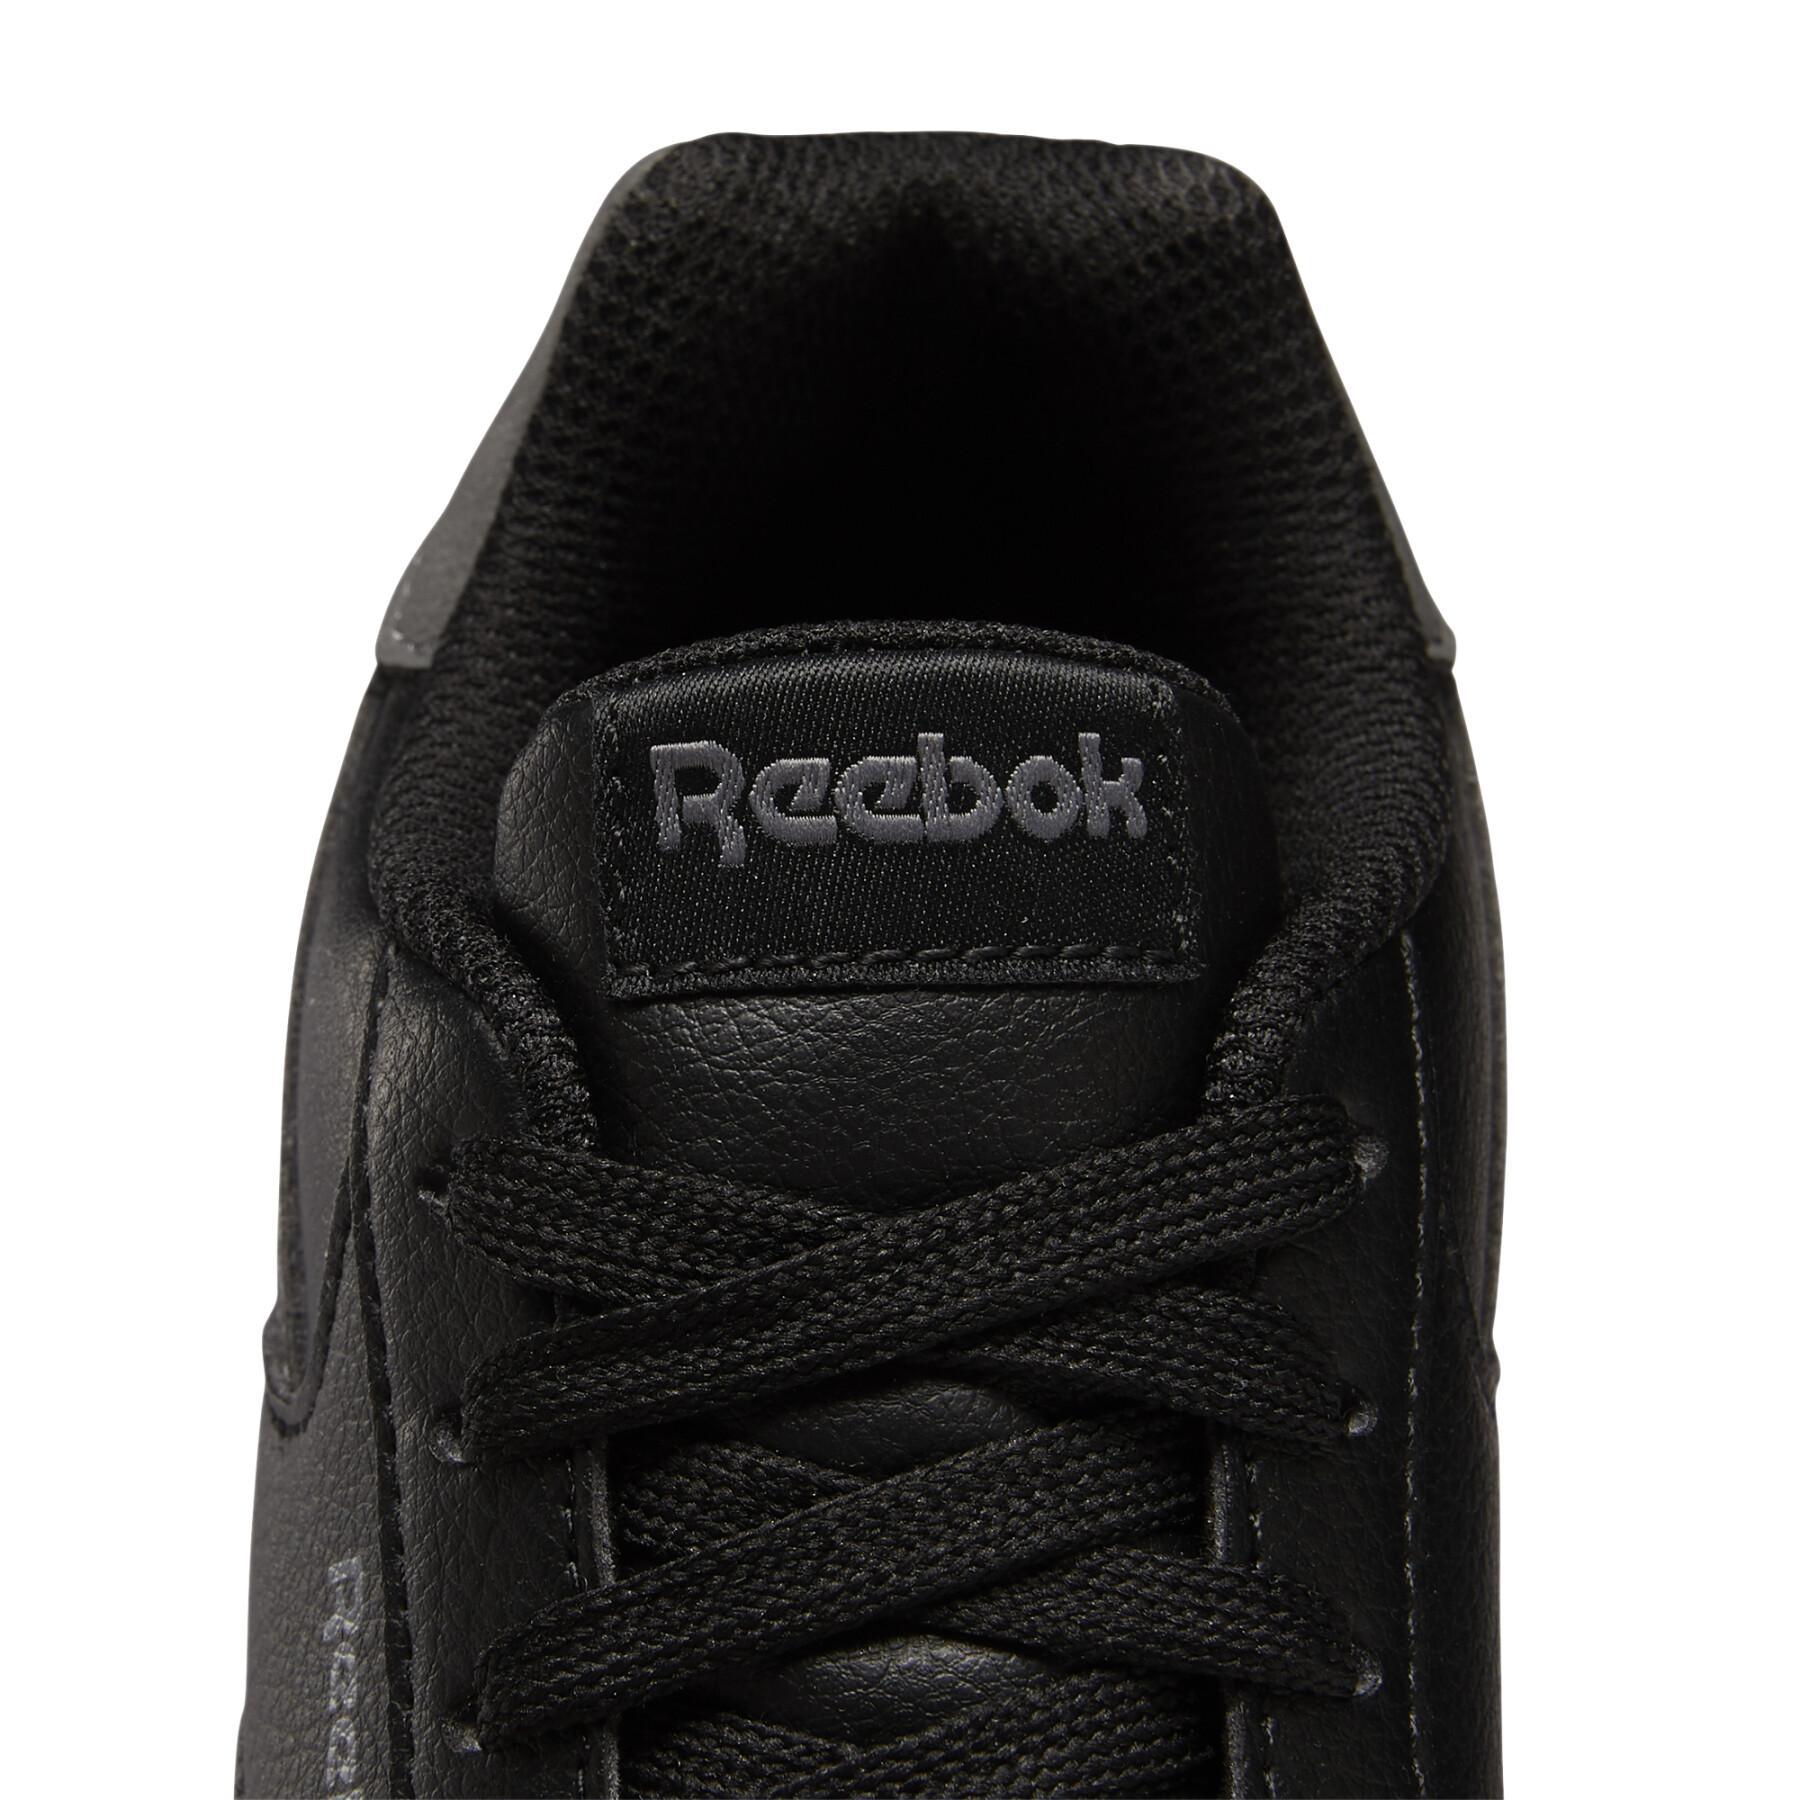 Buty dziecięce Reebok Royal Jogger 3